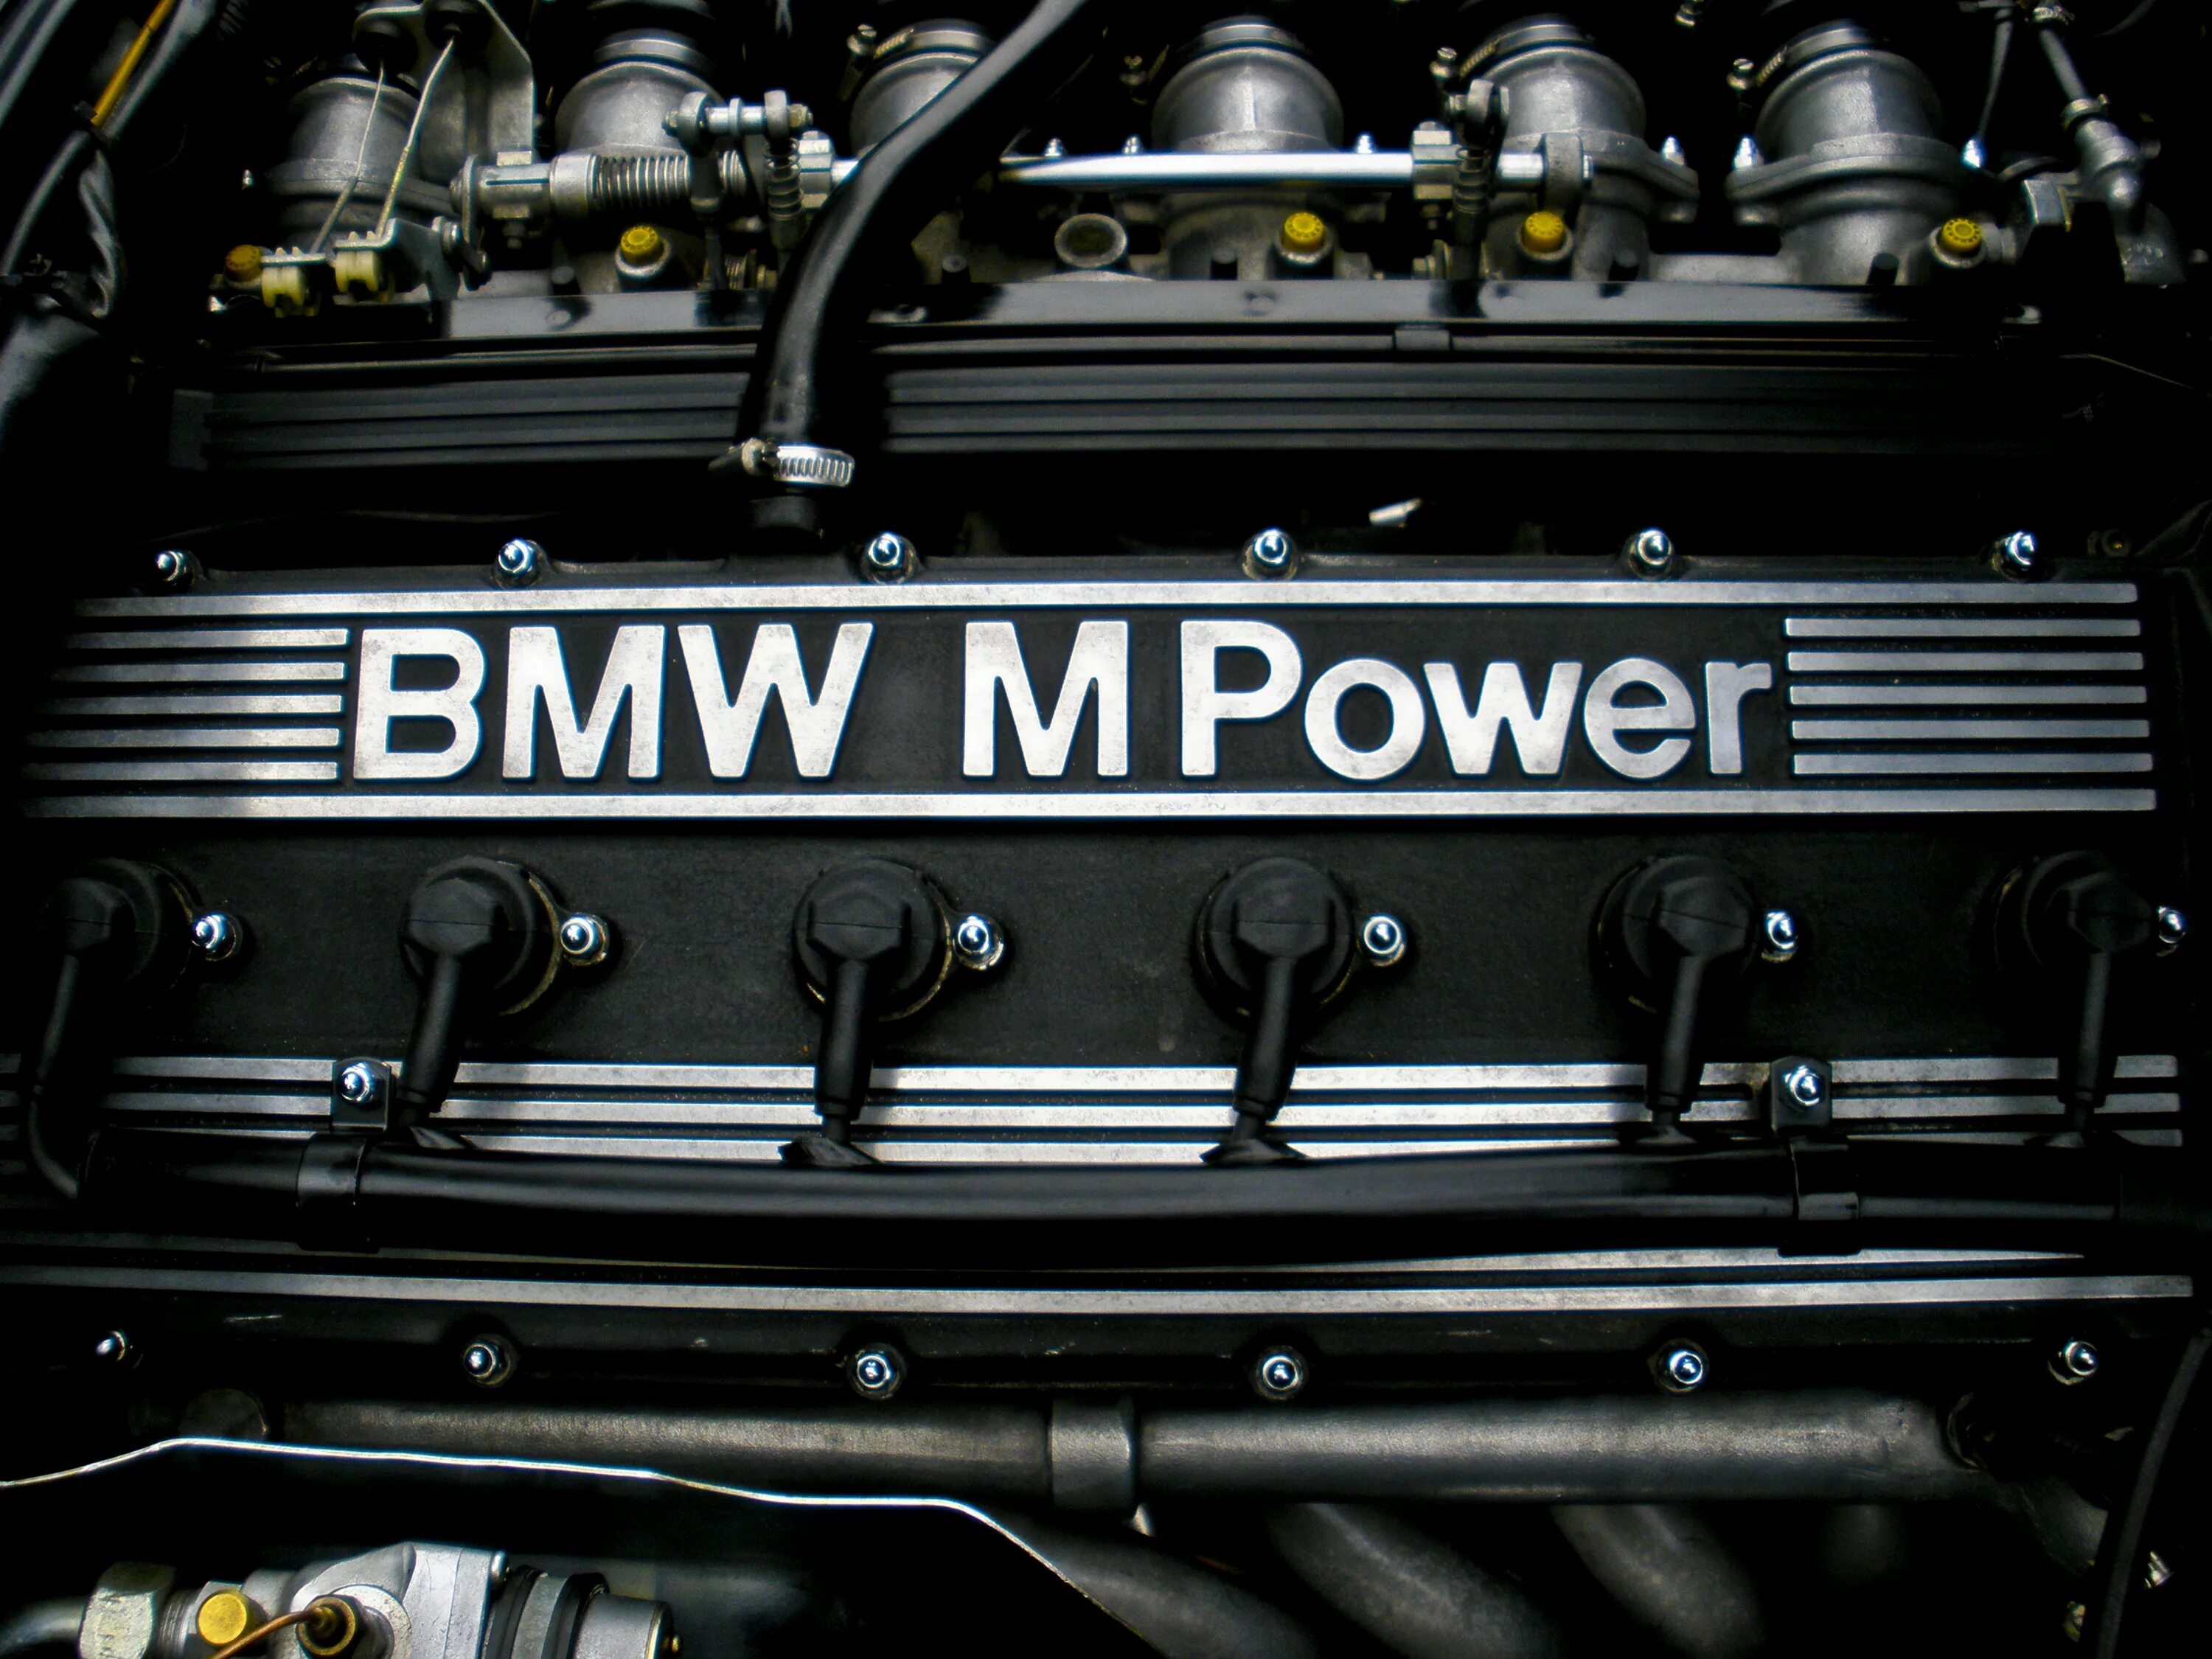 Bmw m power. БМВ М Пауэр. Двигатель БМВ М повер. BMW MPOWER. M Power m50.